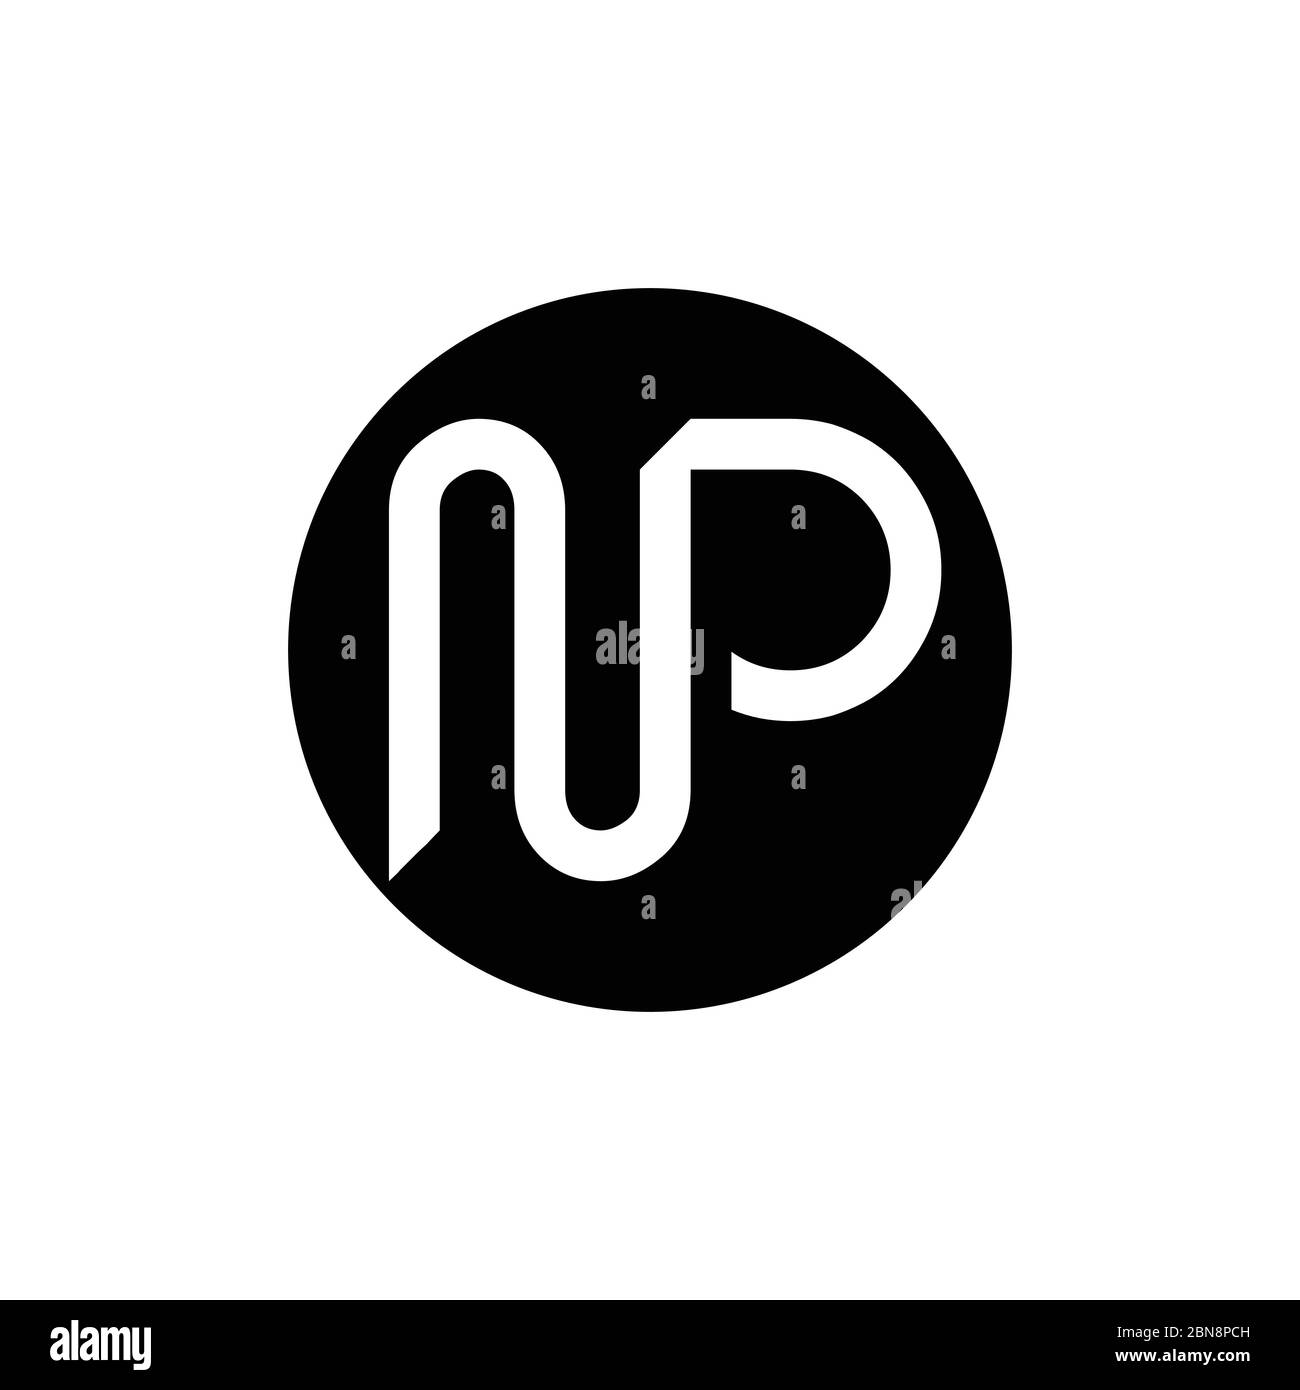 Initial Letter NP Logo Design Vector Template. Creative Abstract NP Letter Logo Design Stock Vector